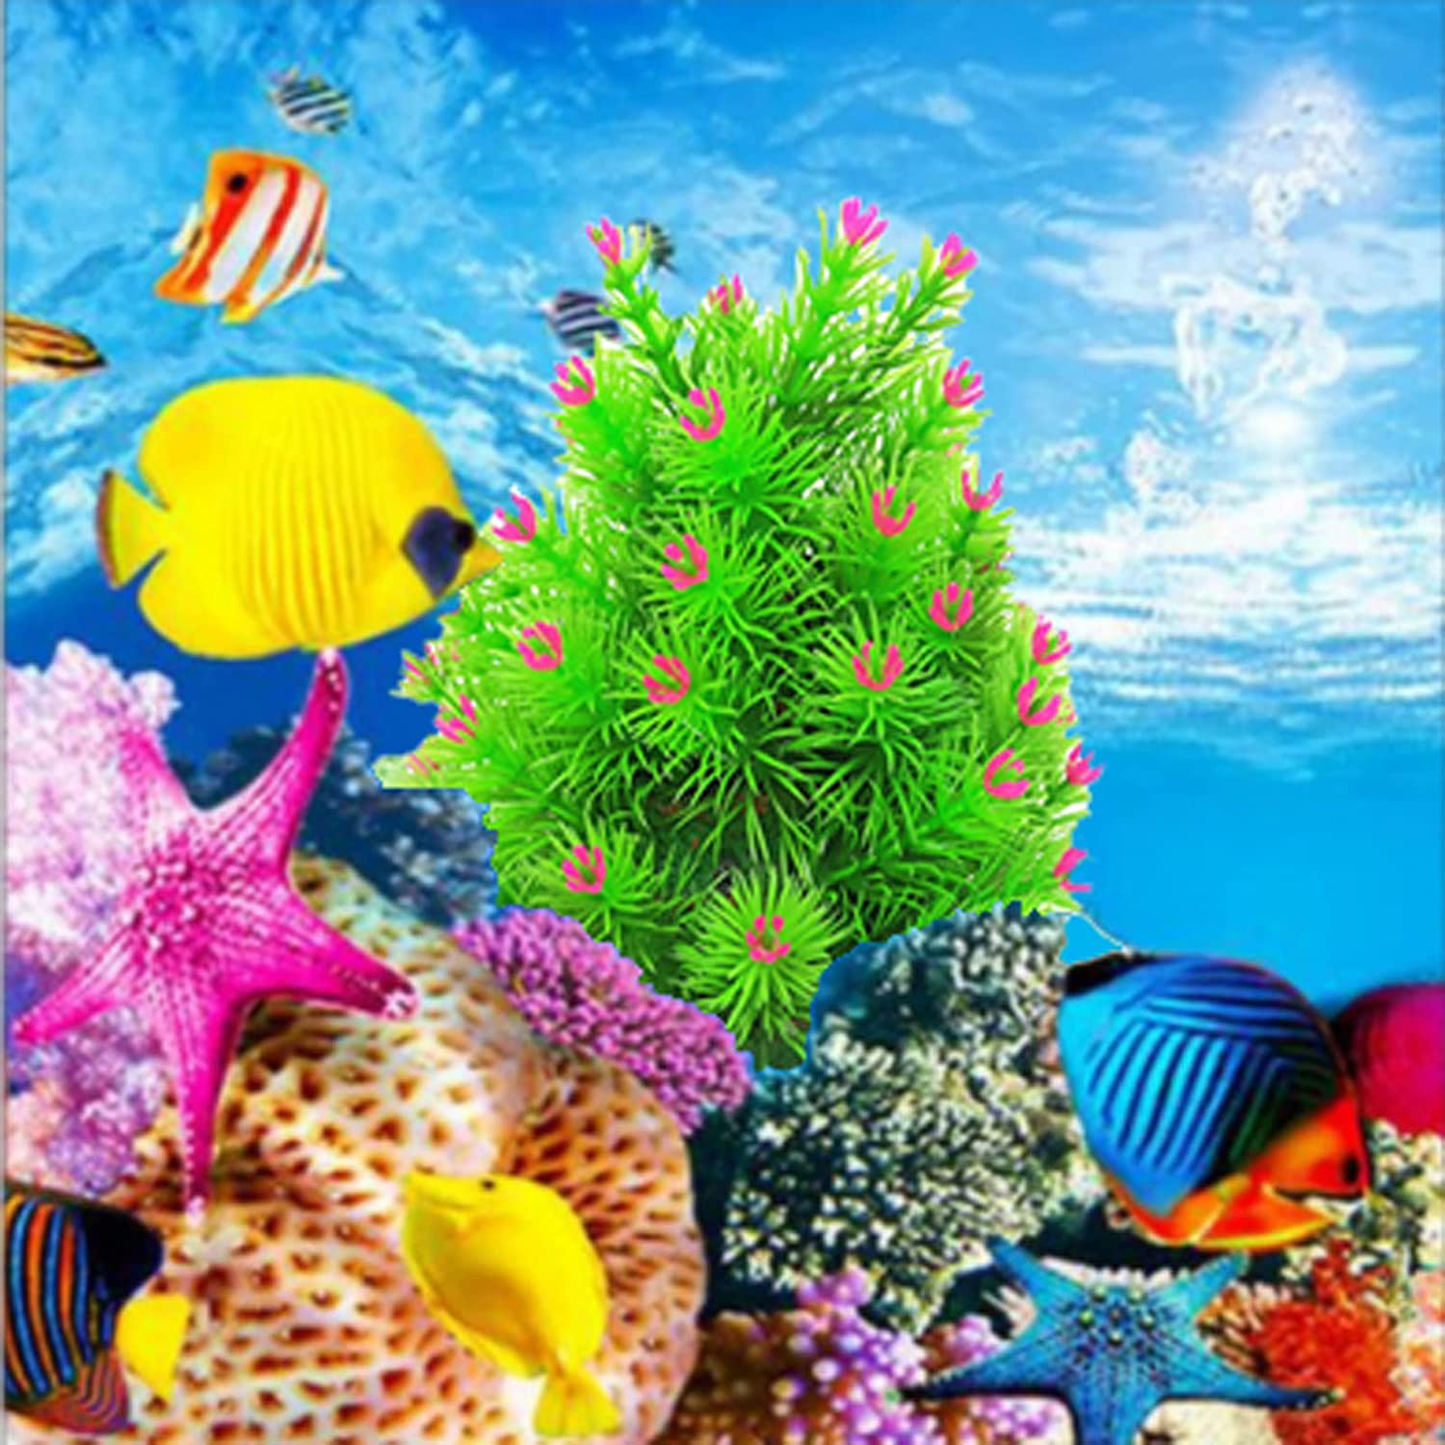 Artificial Green Christmas Tree Ornaments Underwater Aquarium Landscape Background Decorations Fish Tank Decor Accessories Kangsanli Animals & Pet Supplies > Pet Supplies > Fish Supplies > Aquarium Decor Kangsanli   